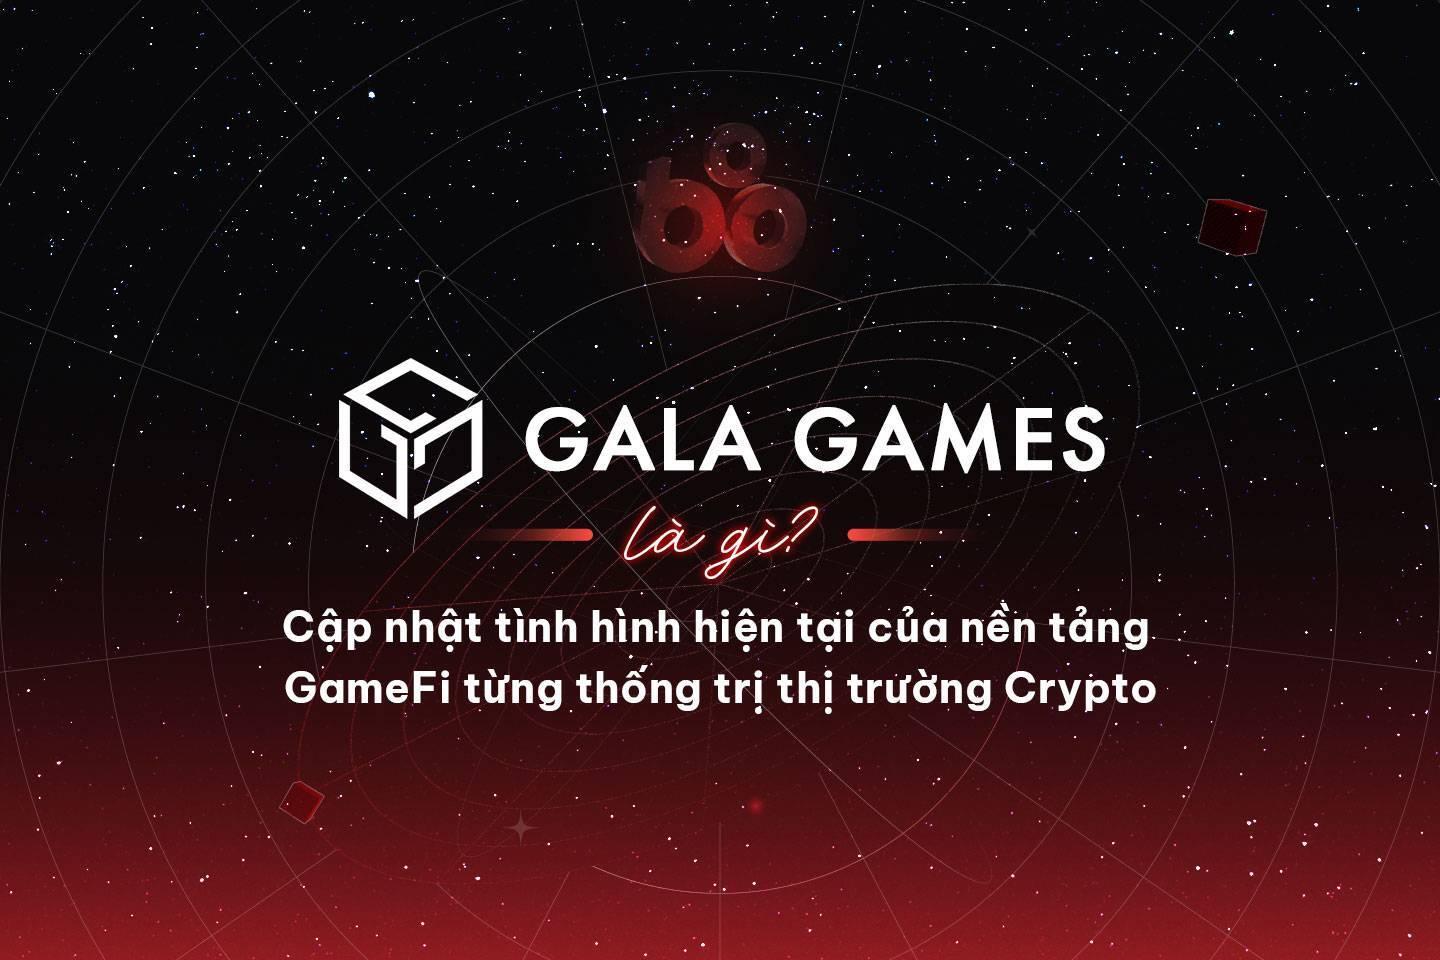 gala-games-la-gi-cap-nhat-tinh-hinh-hien-tai-cua-nen-tang-gamefi-tung-thong-tri-thi-truong-crypto